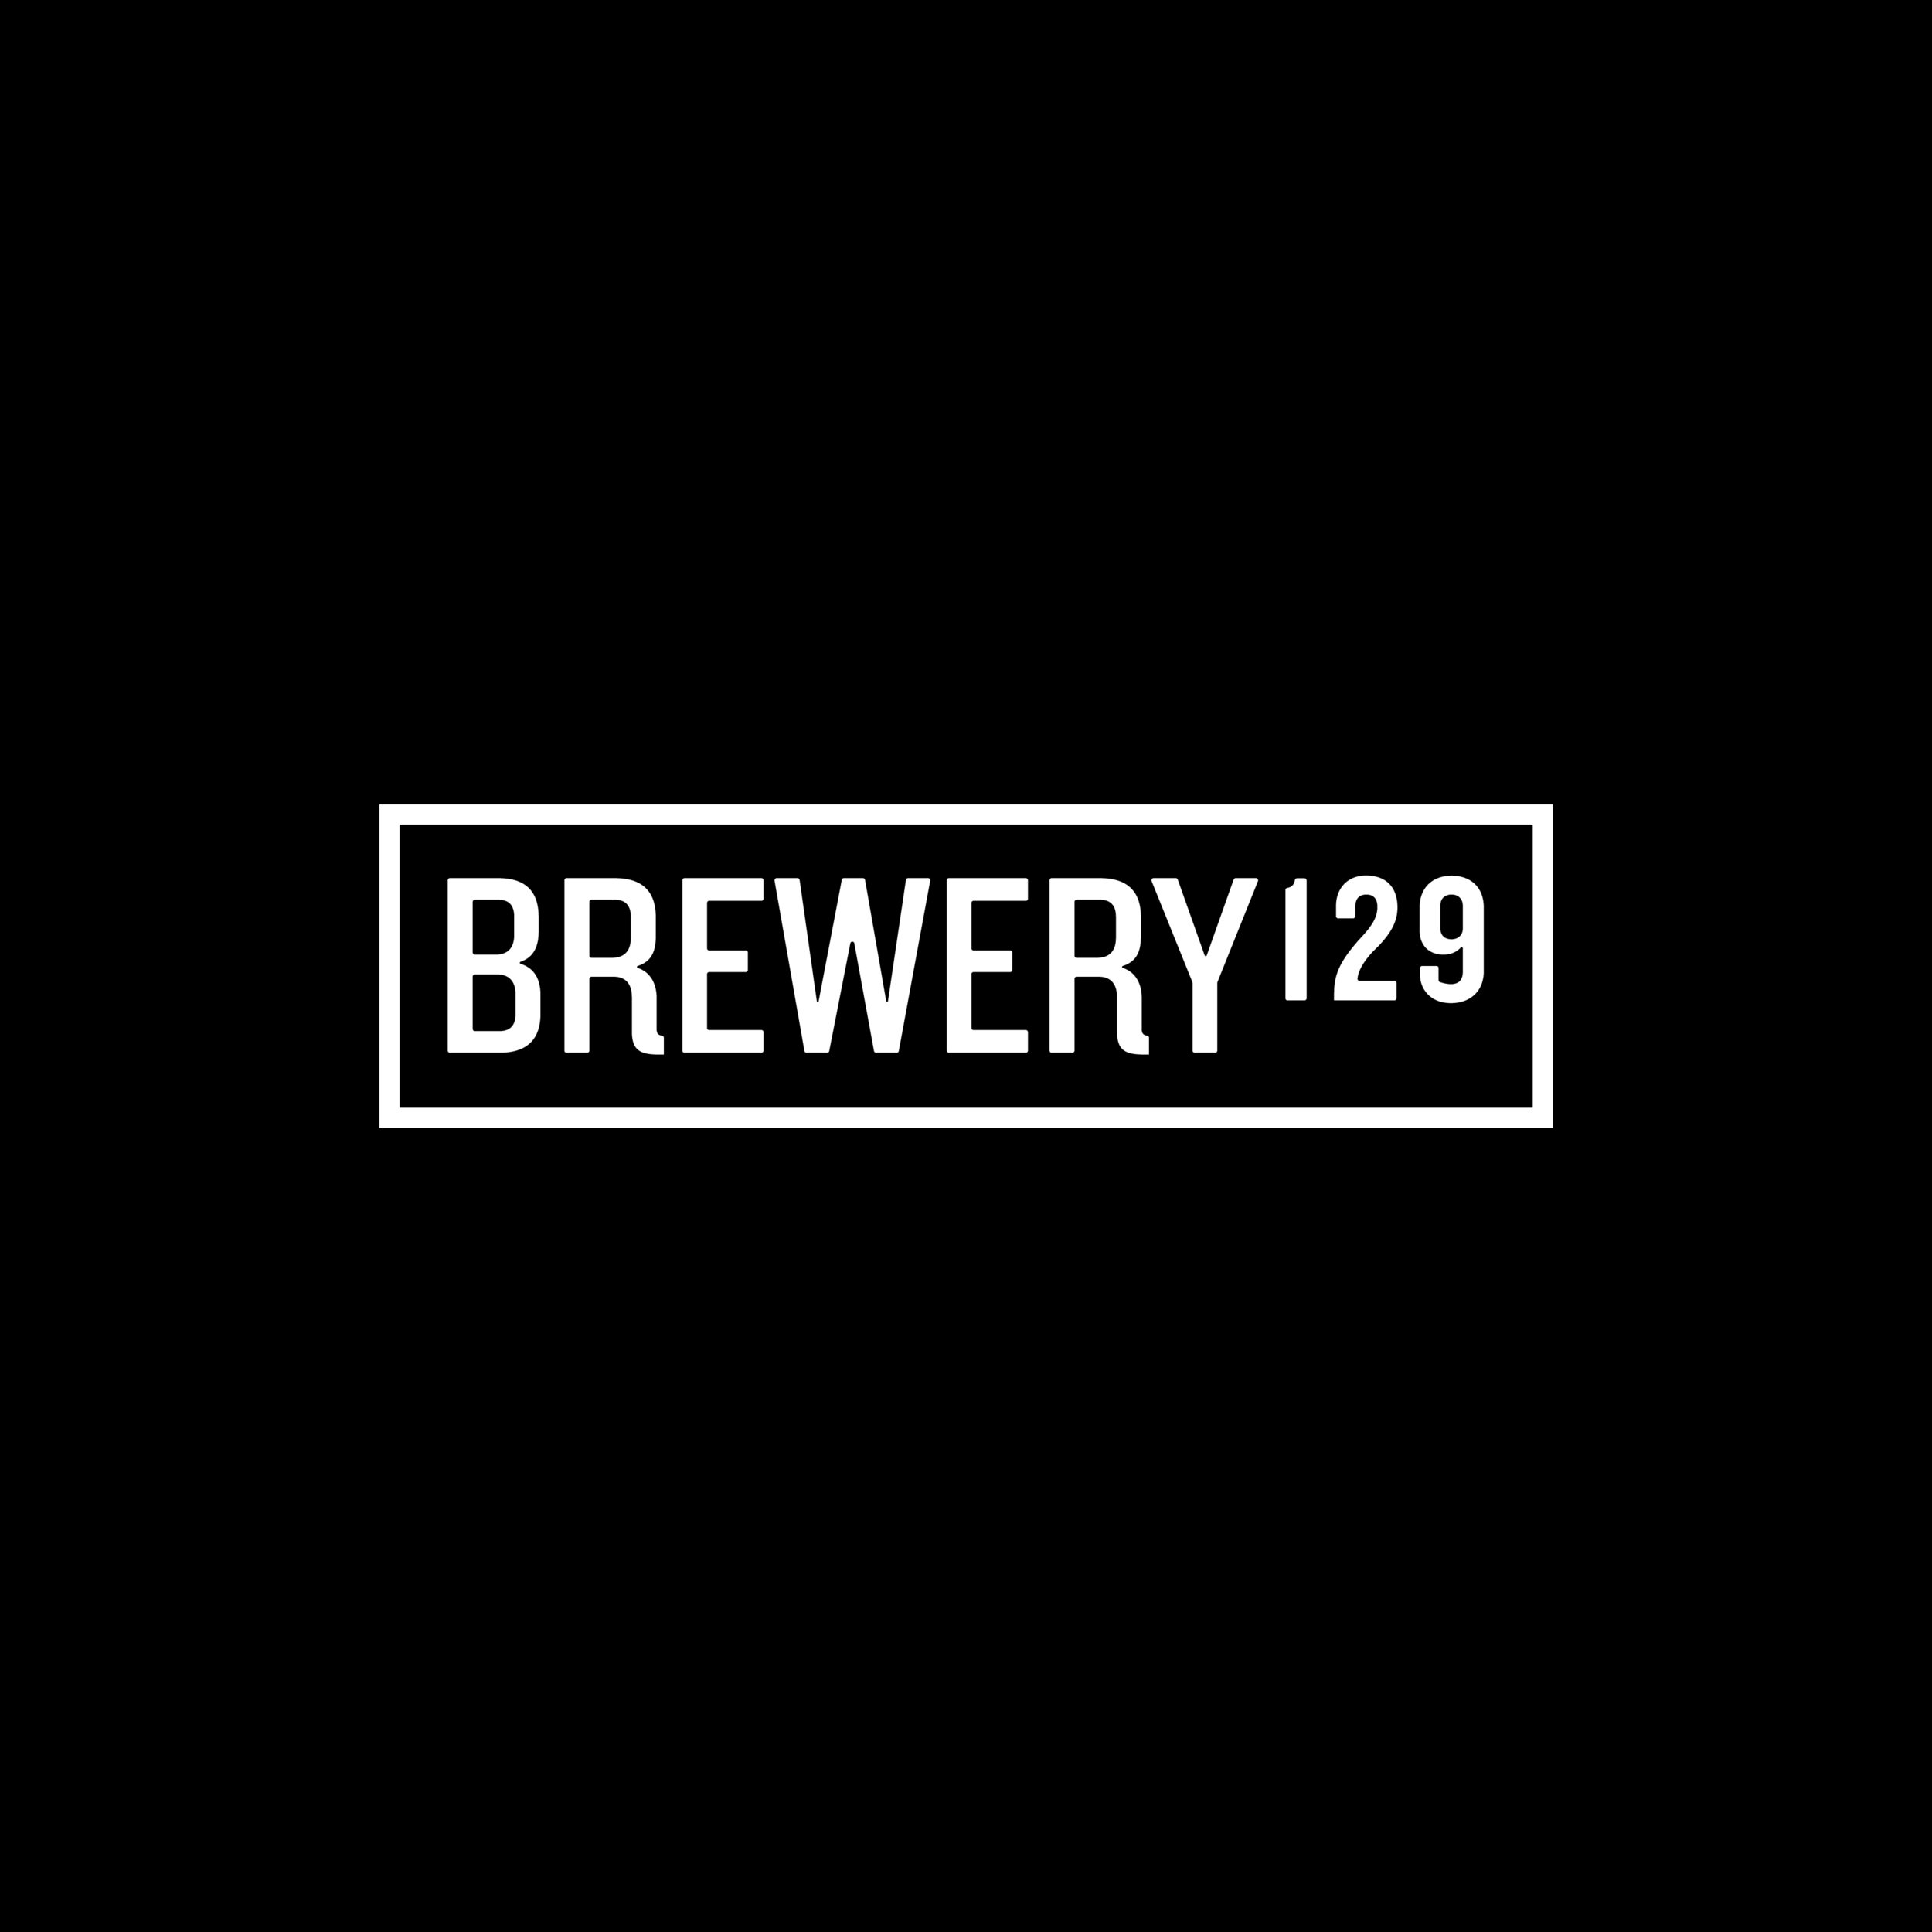 Brewery129 Logos-05.jpg